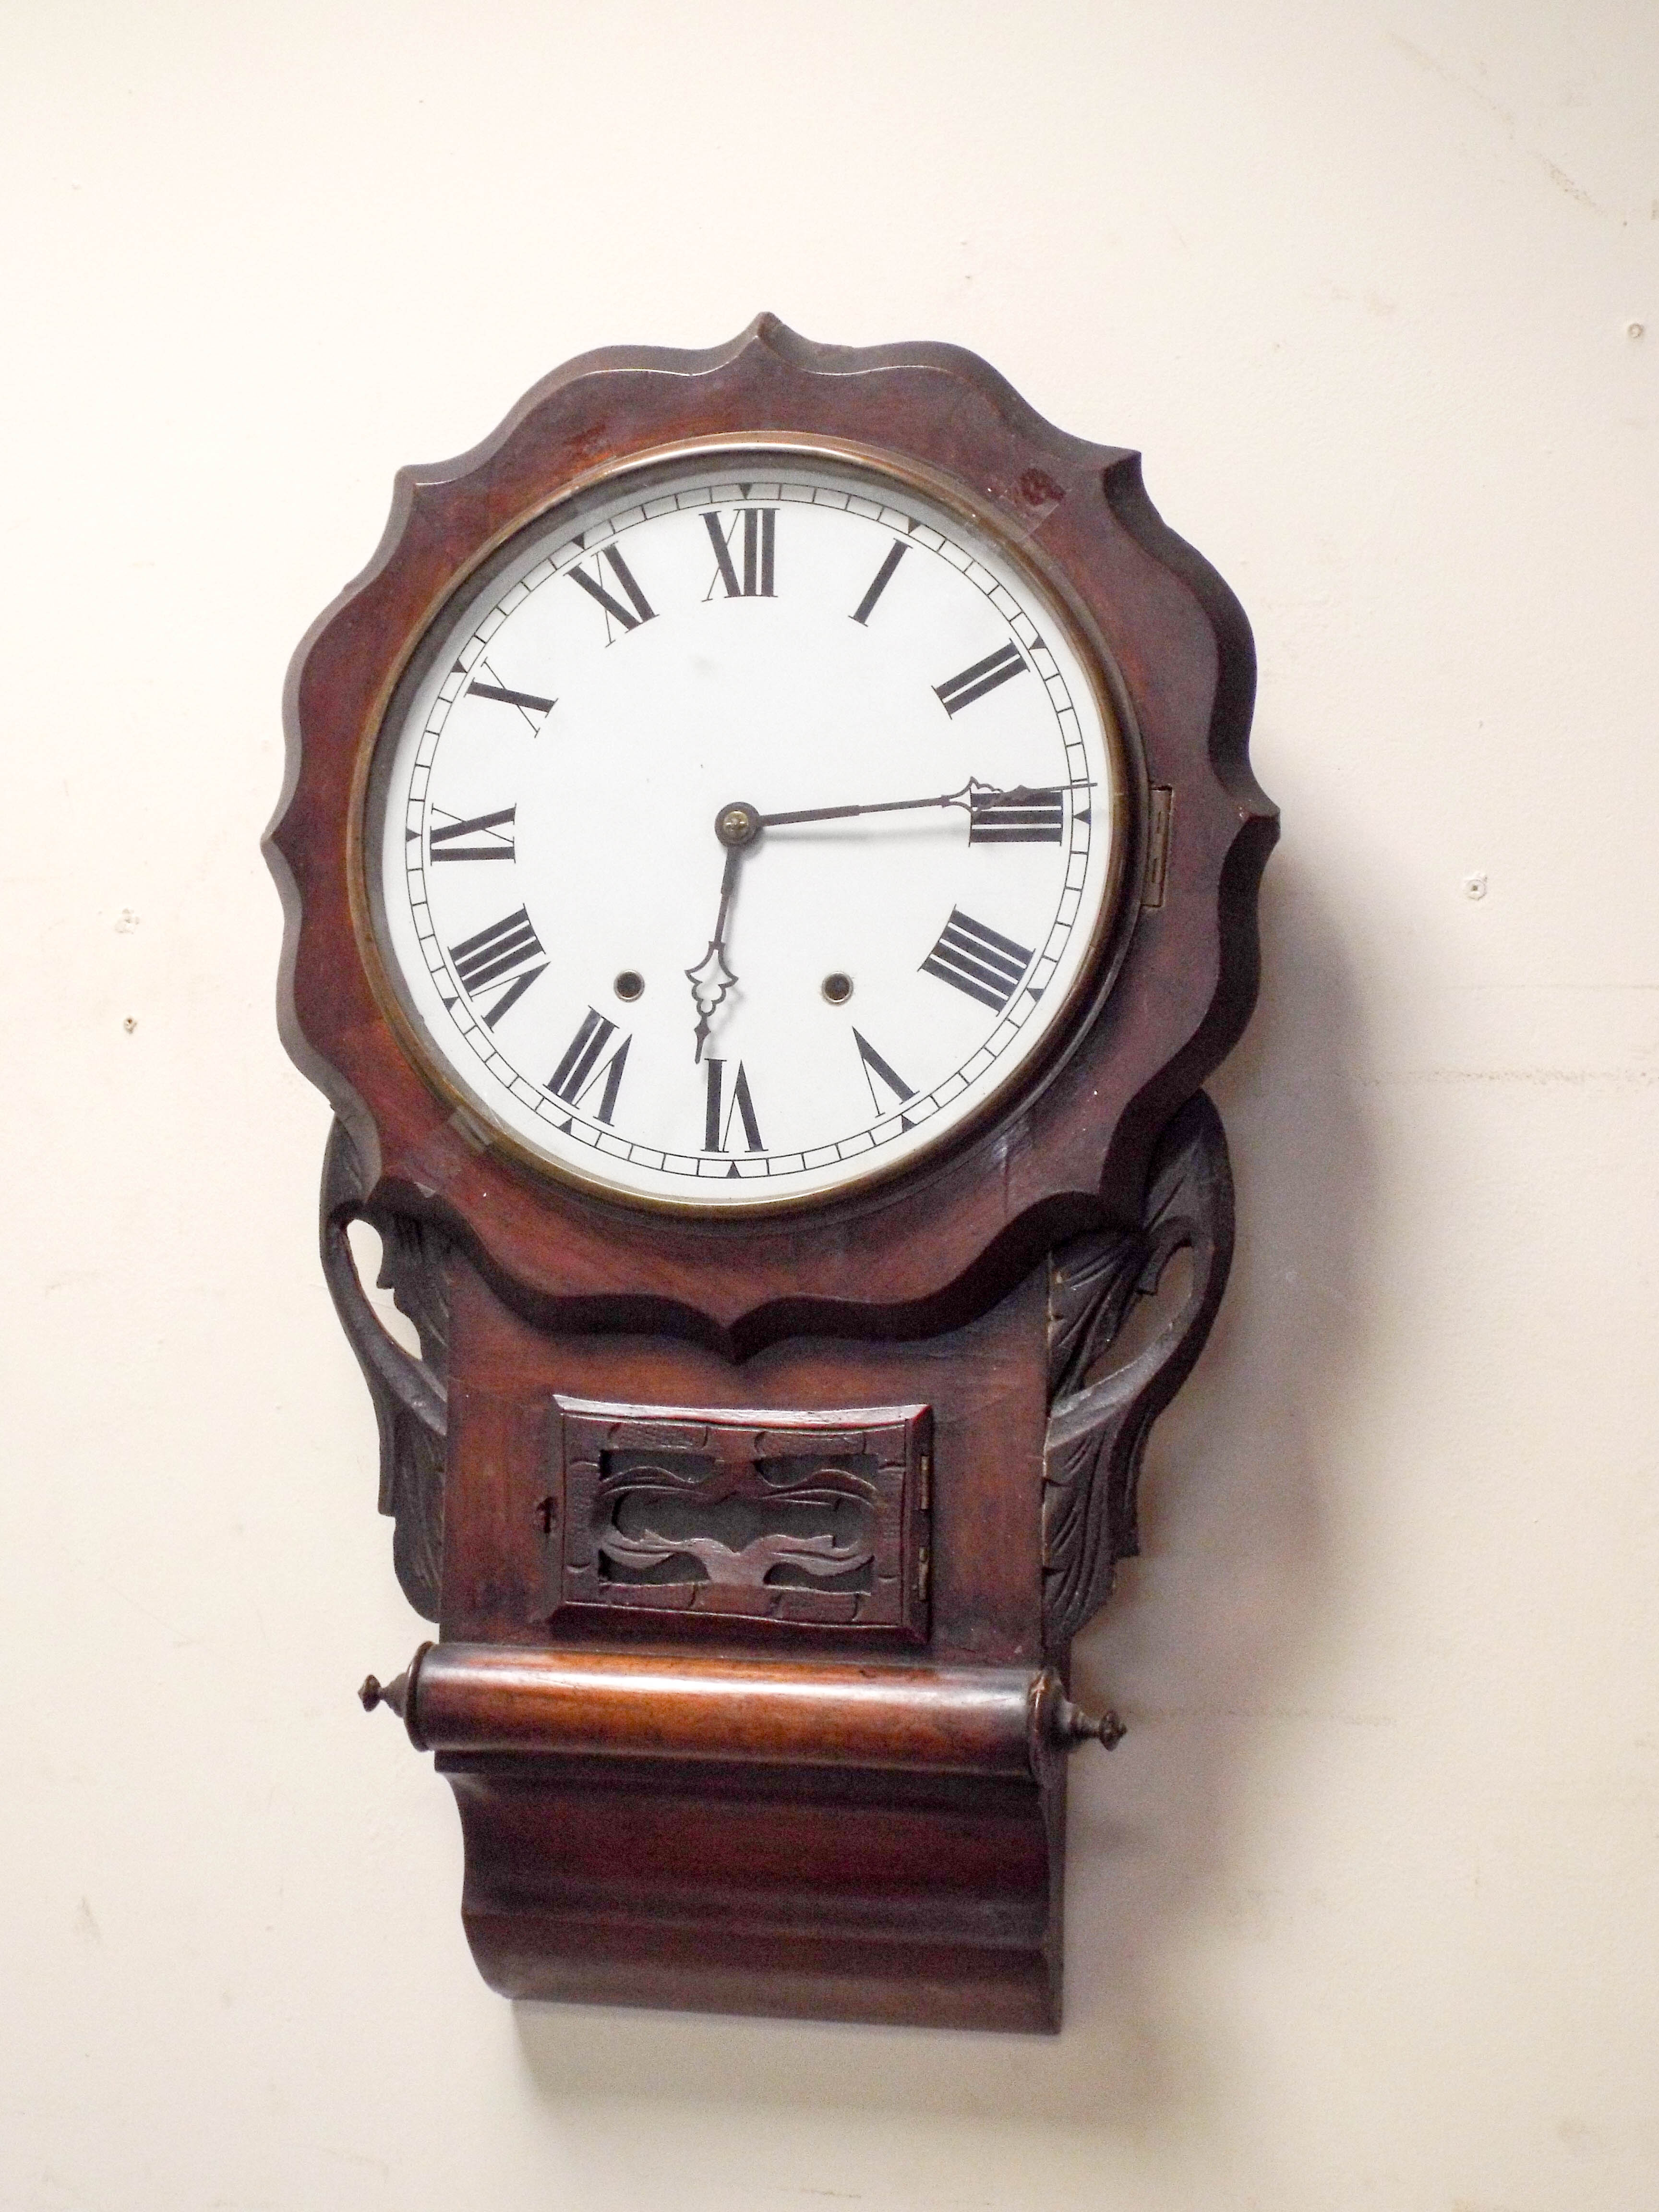 Victorian mahogany drop dial wall clock with striking movement